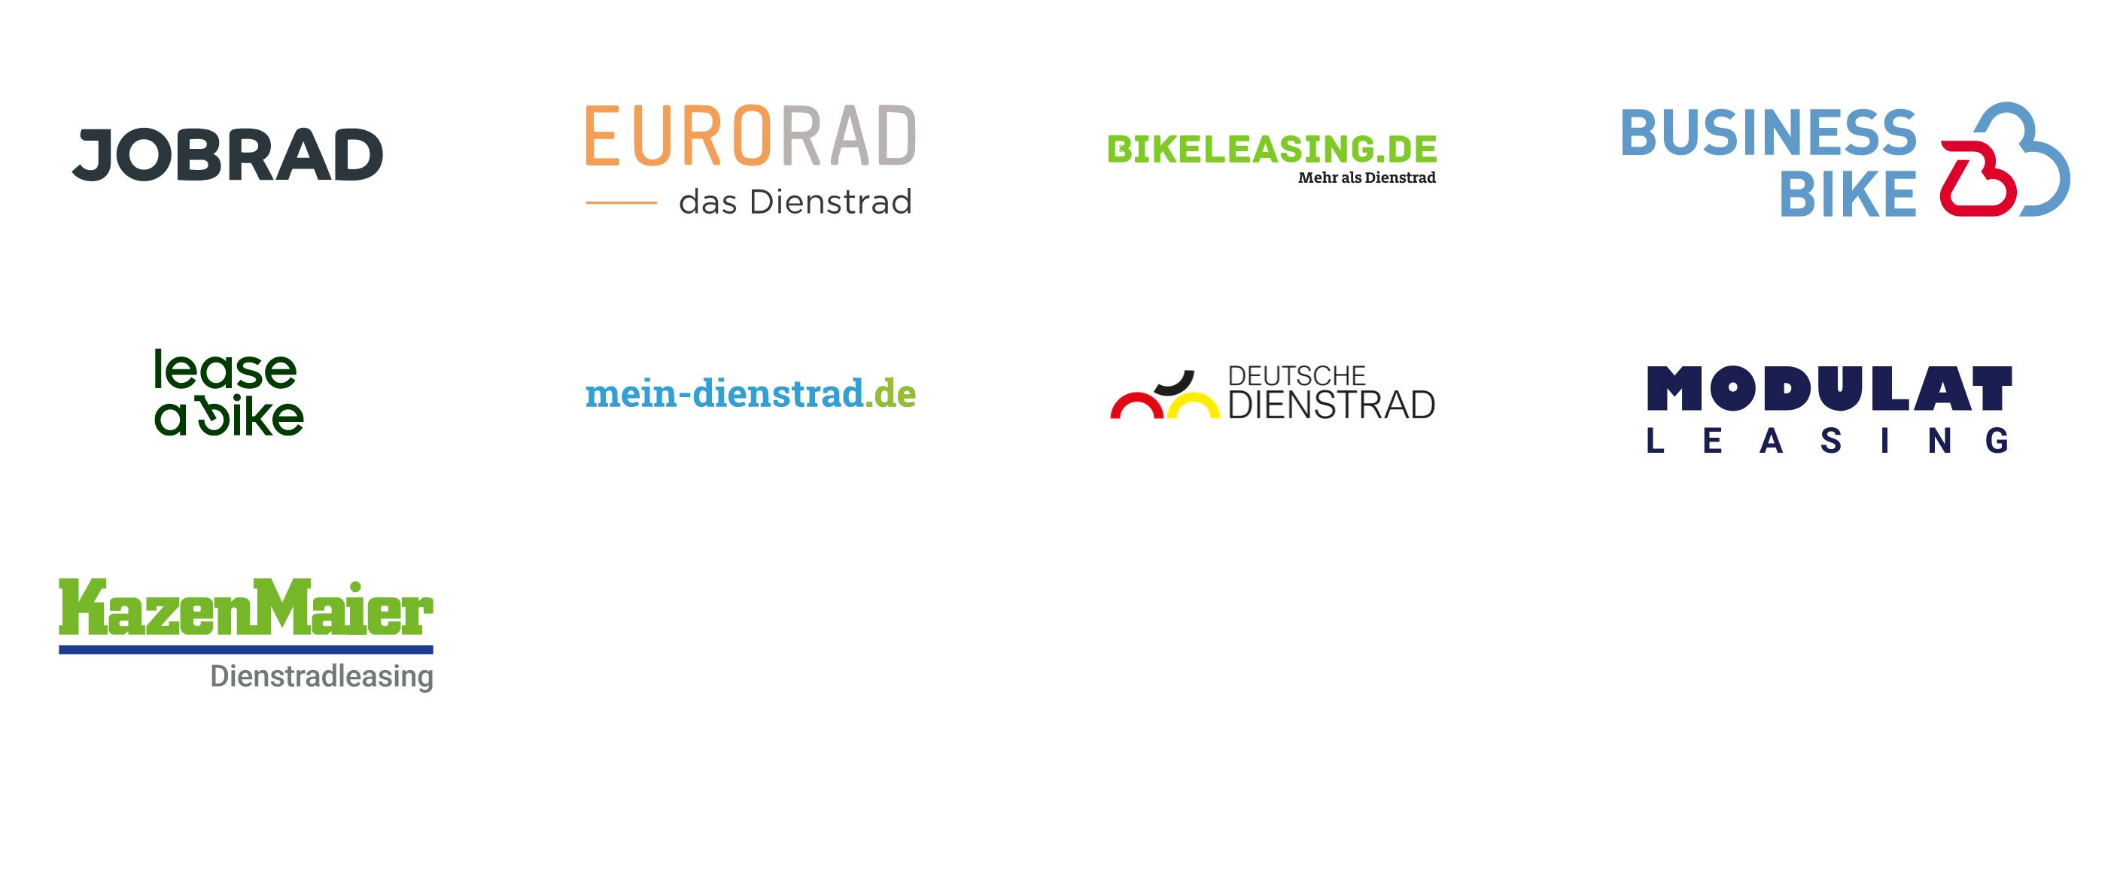 Unsere Leasing Partner Fahrrad Wittstock Stralsund